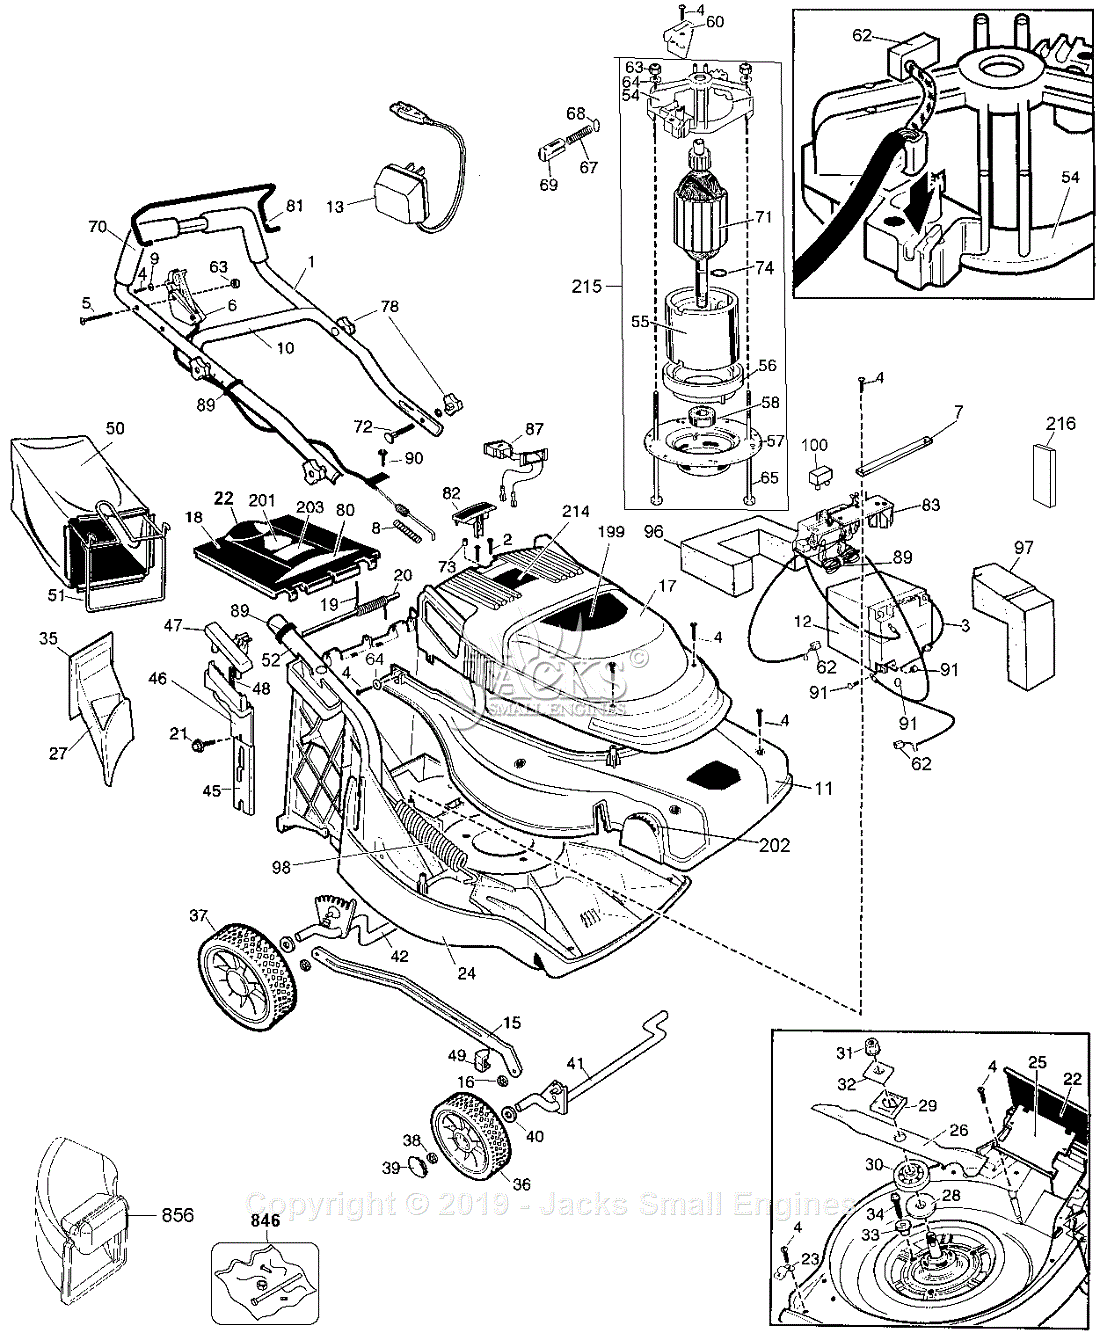 https://az417944.vo.msecnd.net/diagrams/manufacturer/black-decker/lawn-mower/cmm1000-type-4/mower/diagram_1.gif